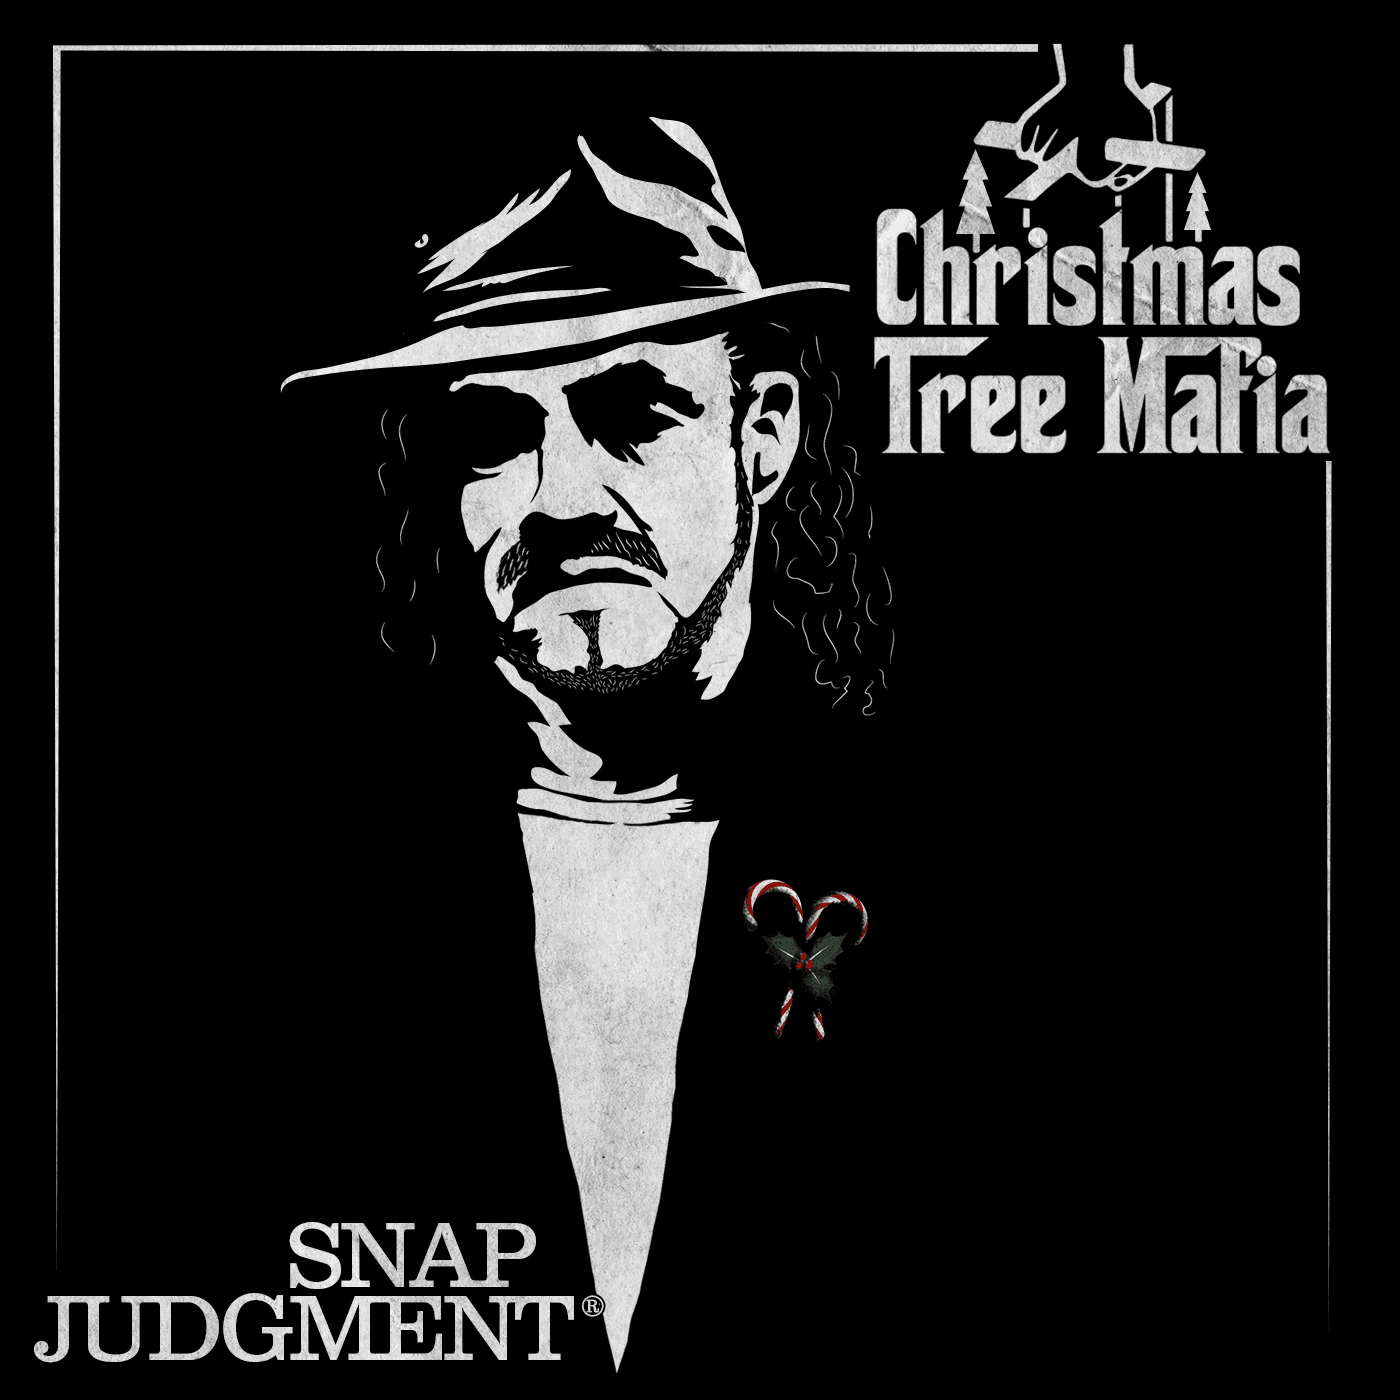 Thumbnail for "The Christmas Tree Mafia".